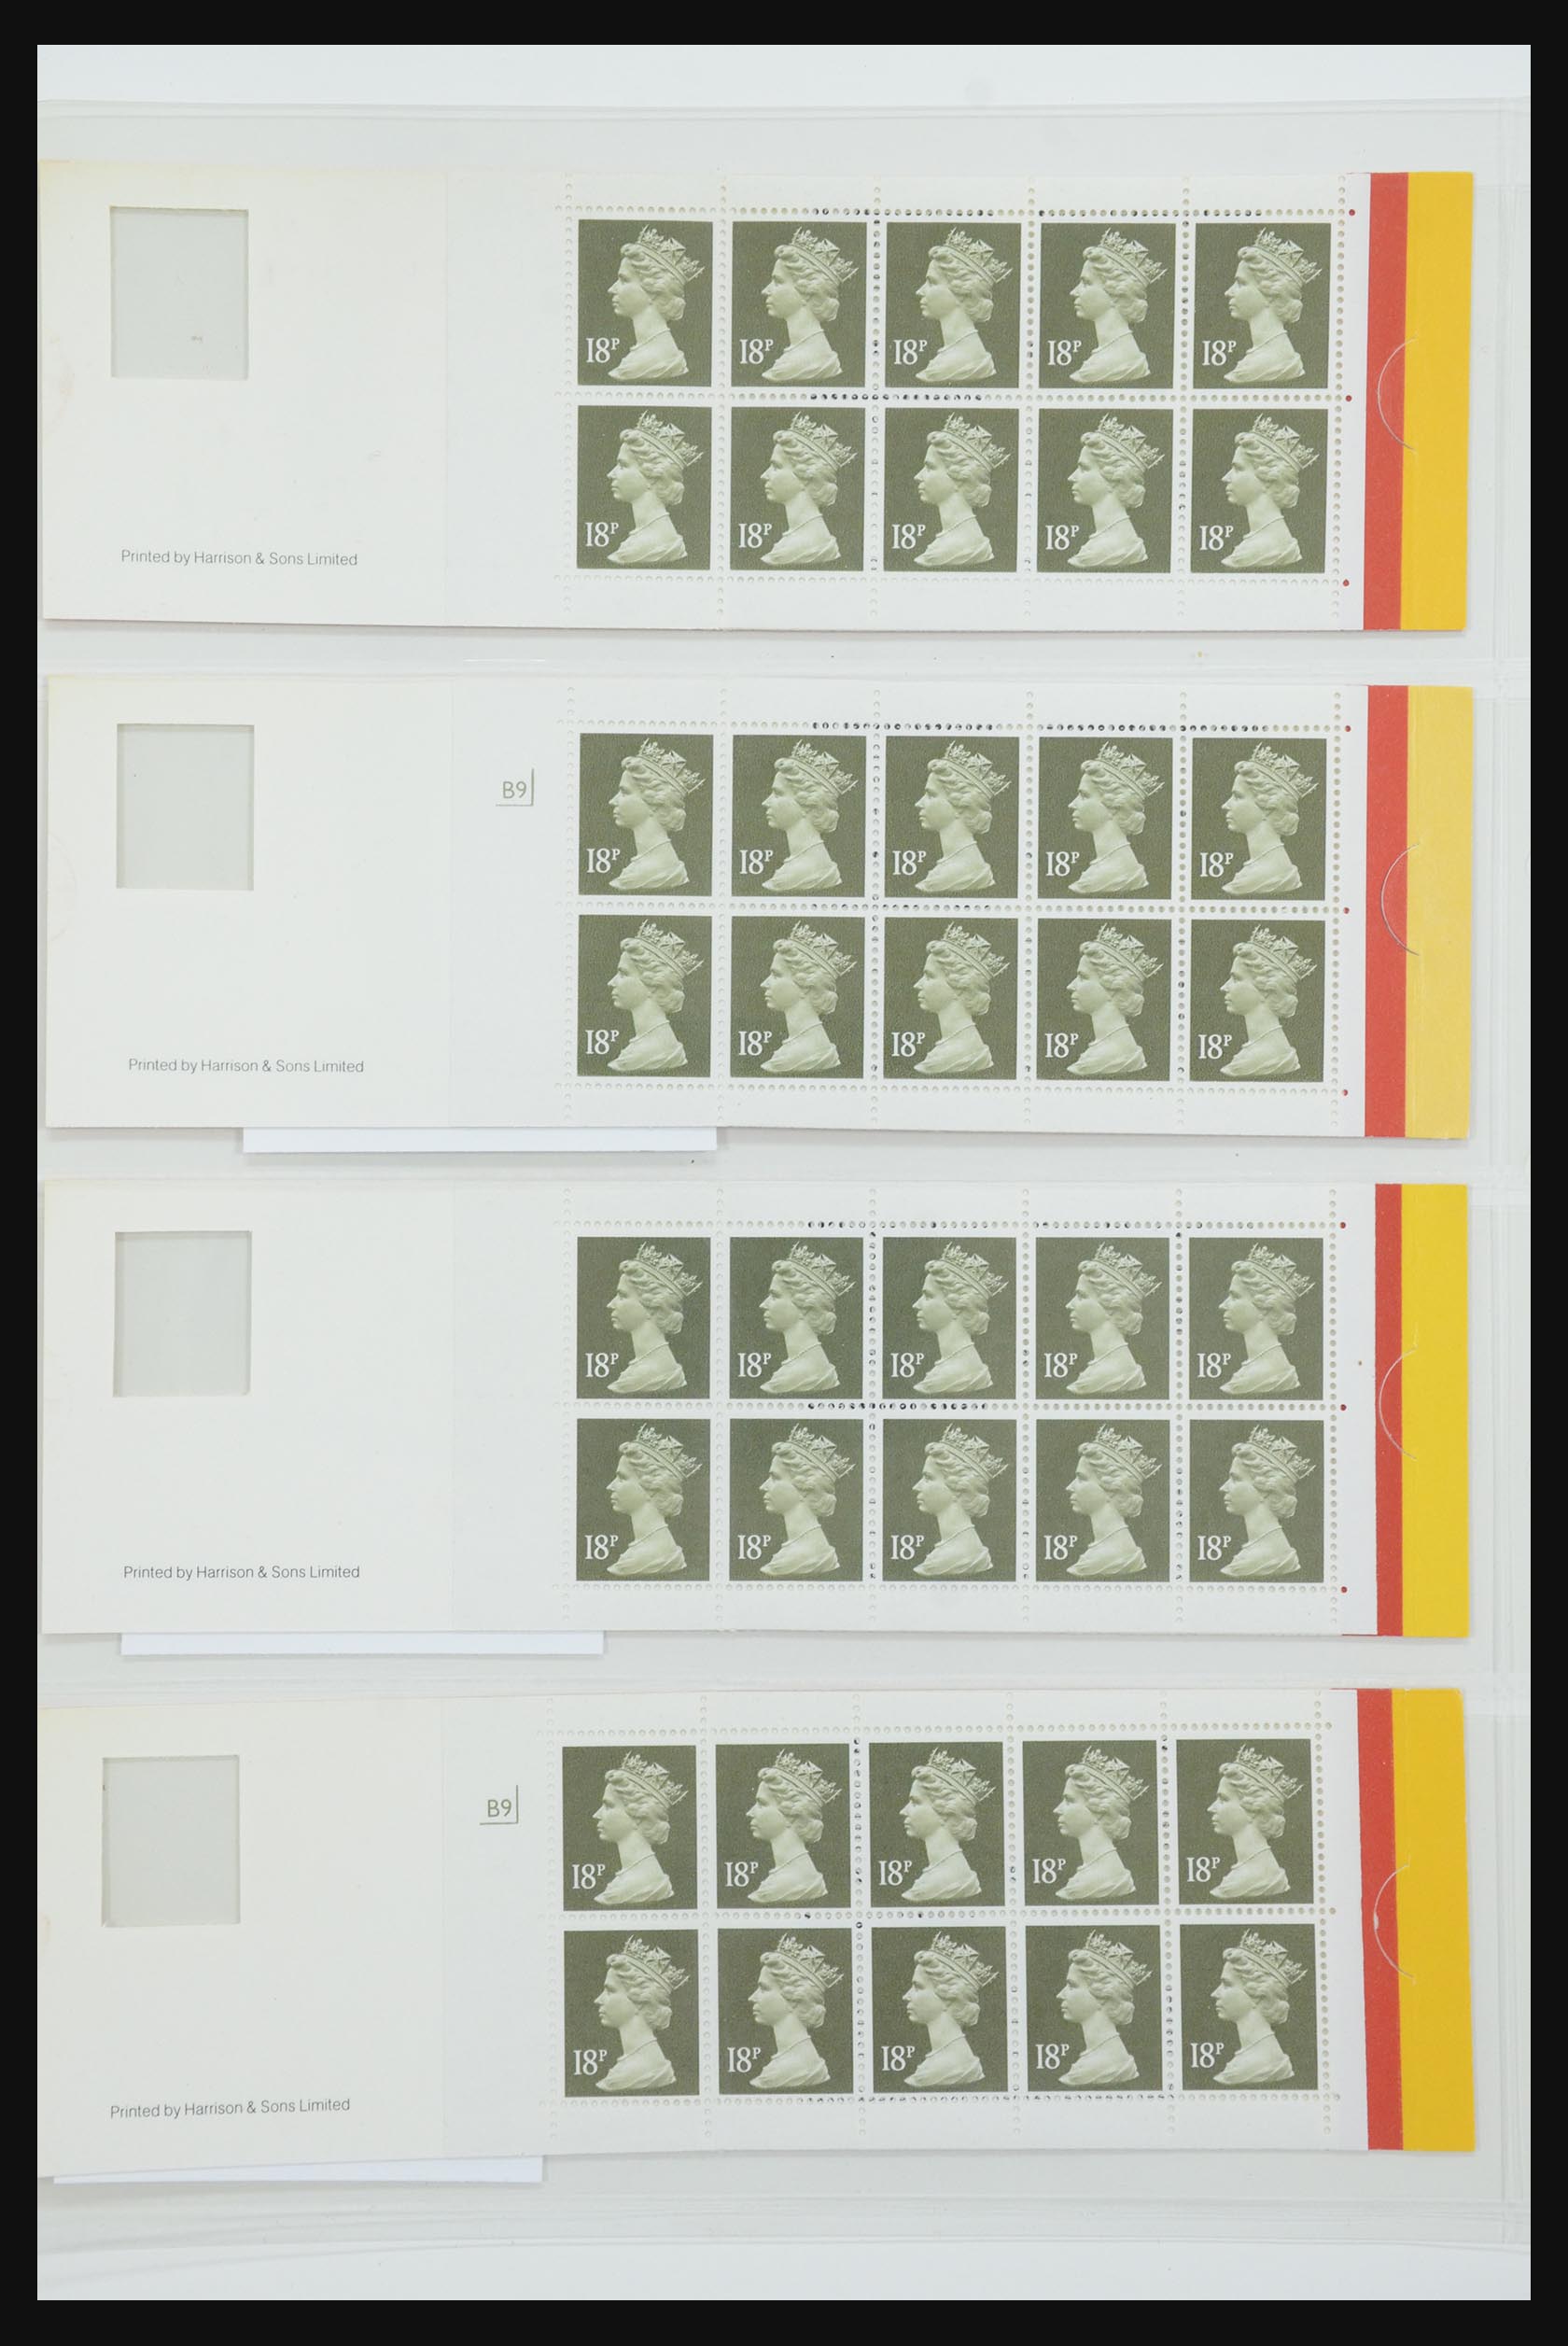 31959 068 - 31959 Great Britain stampbooklets 1987-2016!!